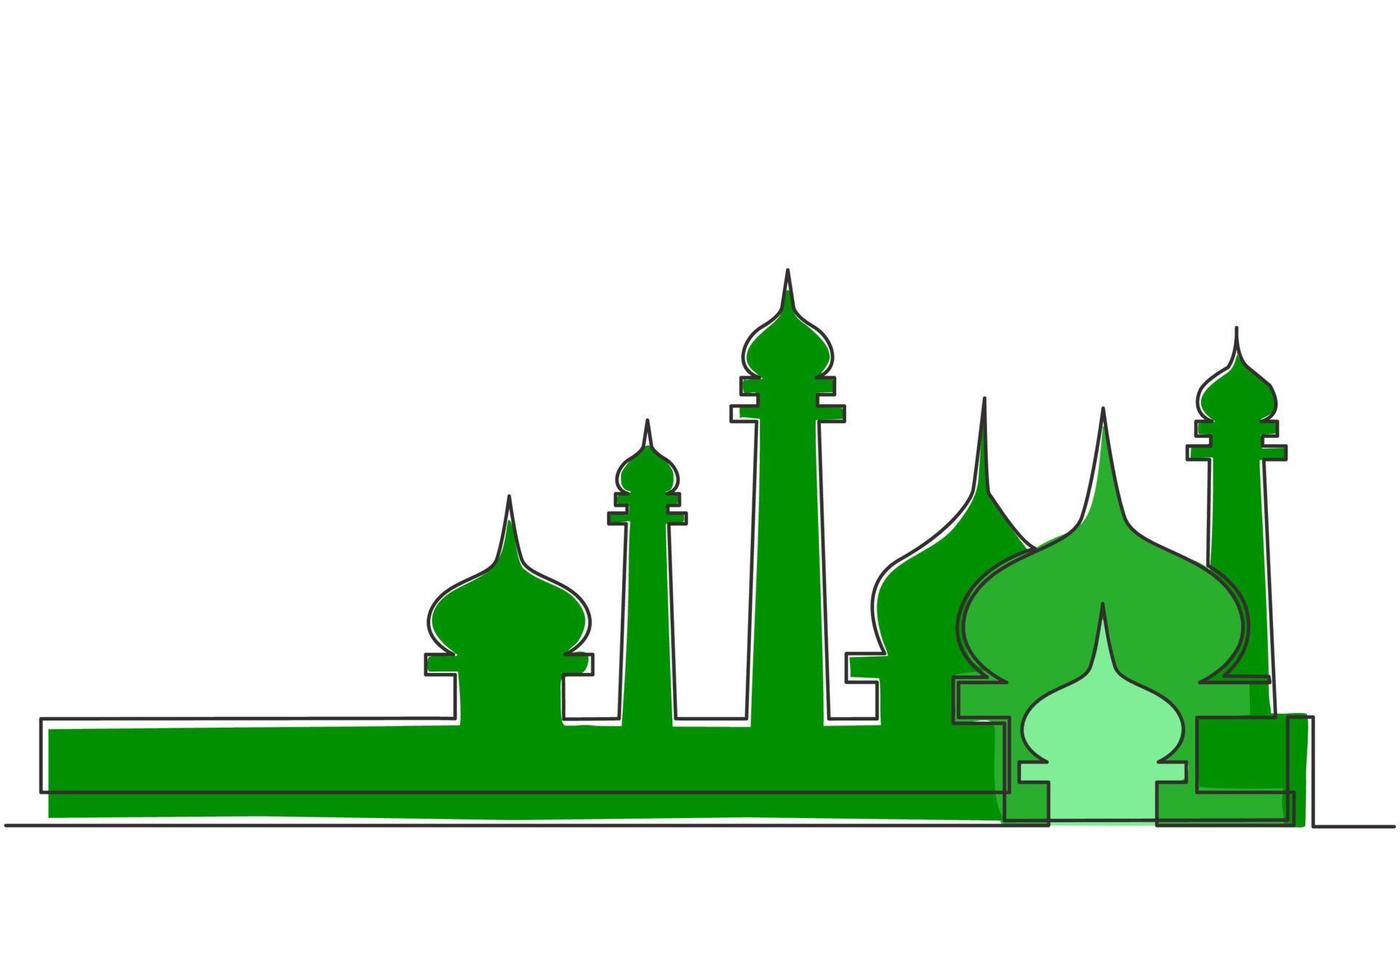 Single continuous line drawing of masjid, masjid dome and masjid tower ornament. Eid Al Fitr Mubarak and Ramadan Kareem greeting card concept one line draw design vector illustration